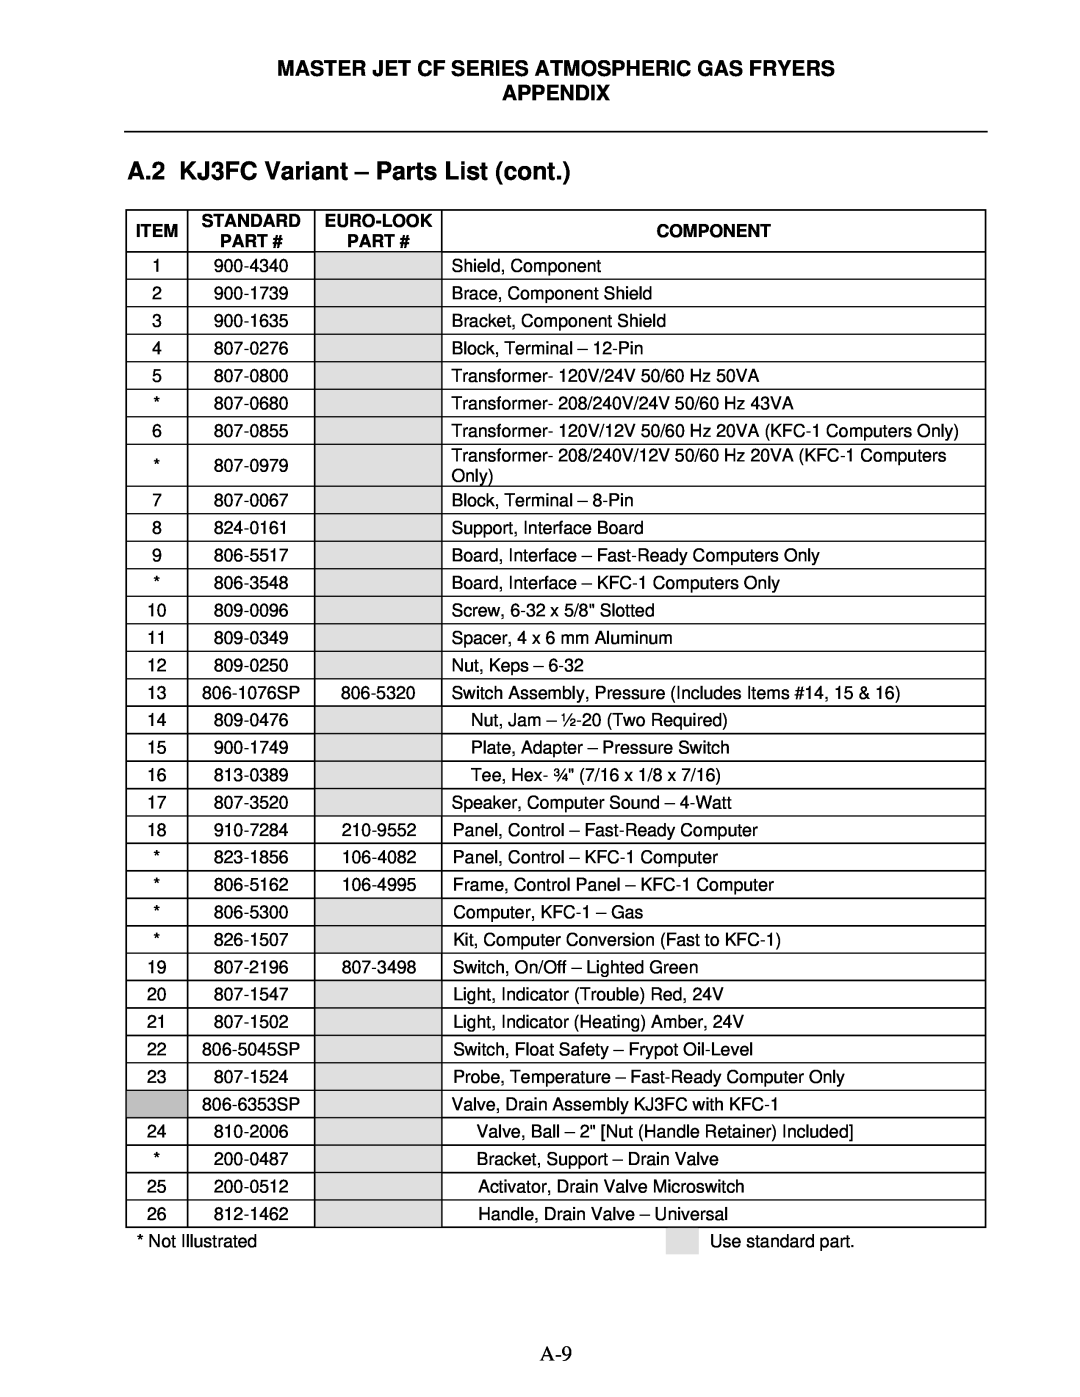 Frymaster MJCF KJ3FC Variant - Parts List cont, Master Jet Cf Series Atmospheric Gas Fryers Appendix, Standard, Euro-Look 